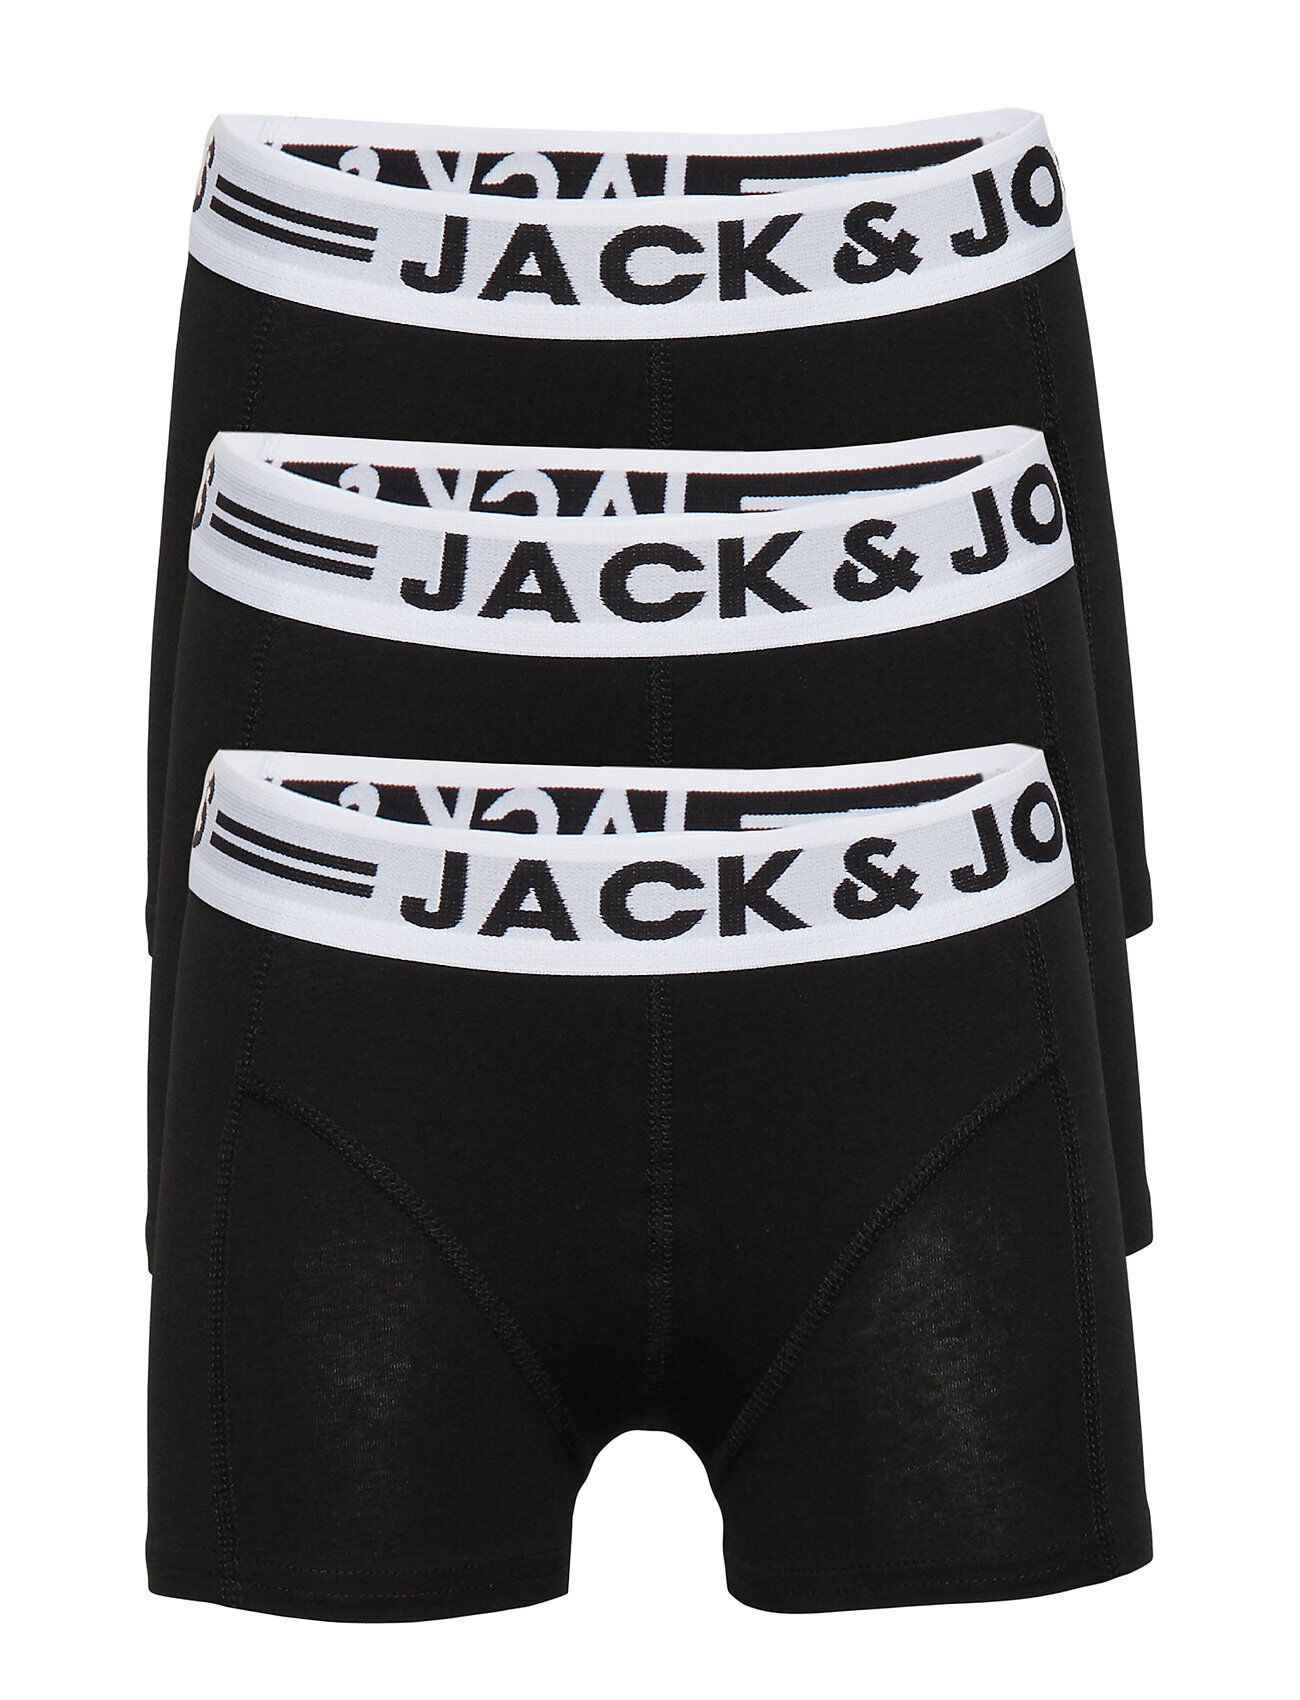 Jack & Jones Sense Trunks 3-Pack Noos Jr Night & Underwear Underwear Underpants Svart Jack & J S